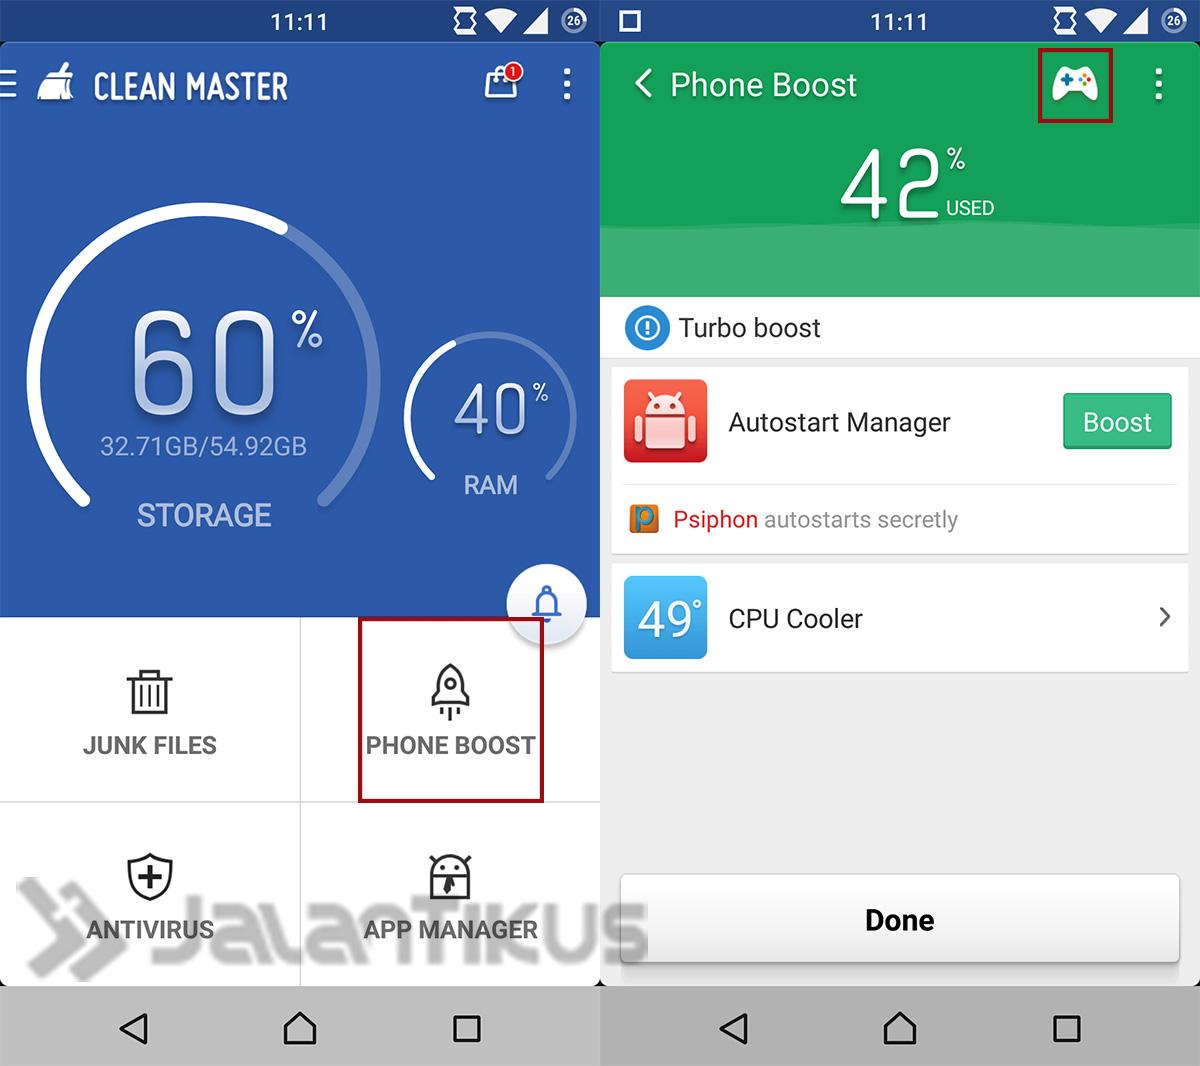 Close android. Старые версии clean Master для андроид интерфейсы приложений. Clean Master с ракетой для андроида. Phone Boost перевести на русский язык.